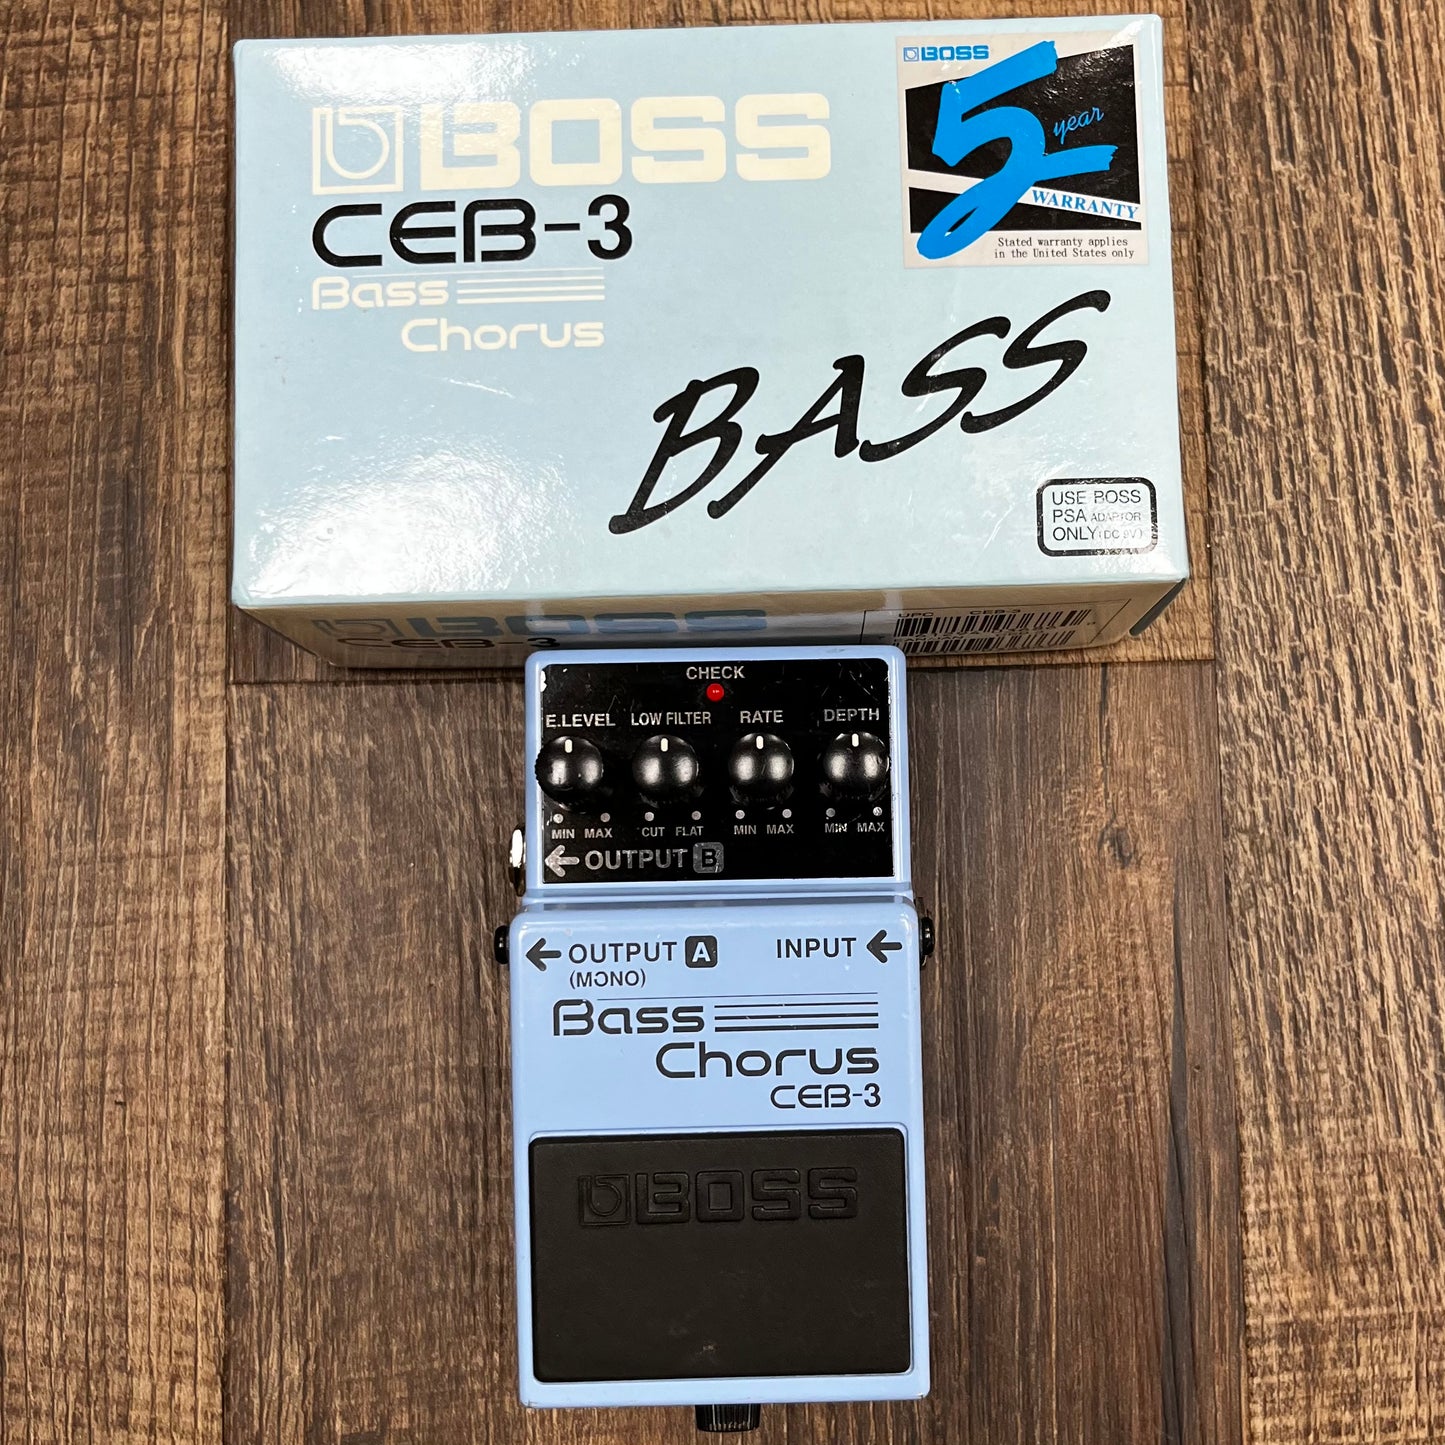 Top of w/box of Used Boss CEB-3 Bass Chorus w/box TFW224